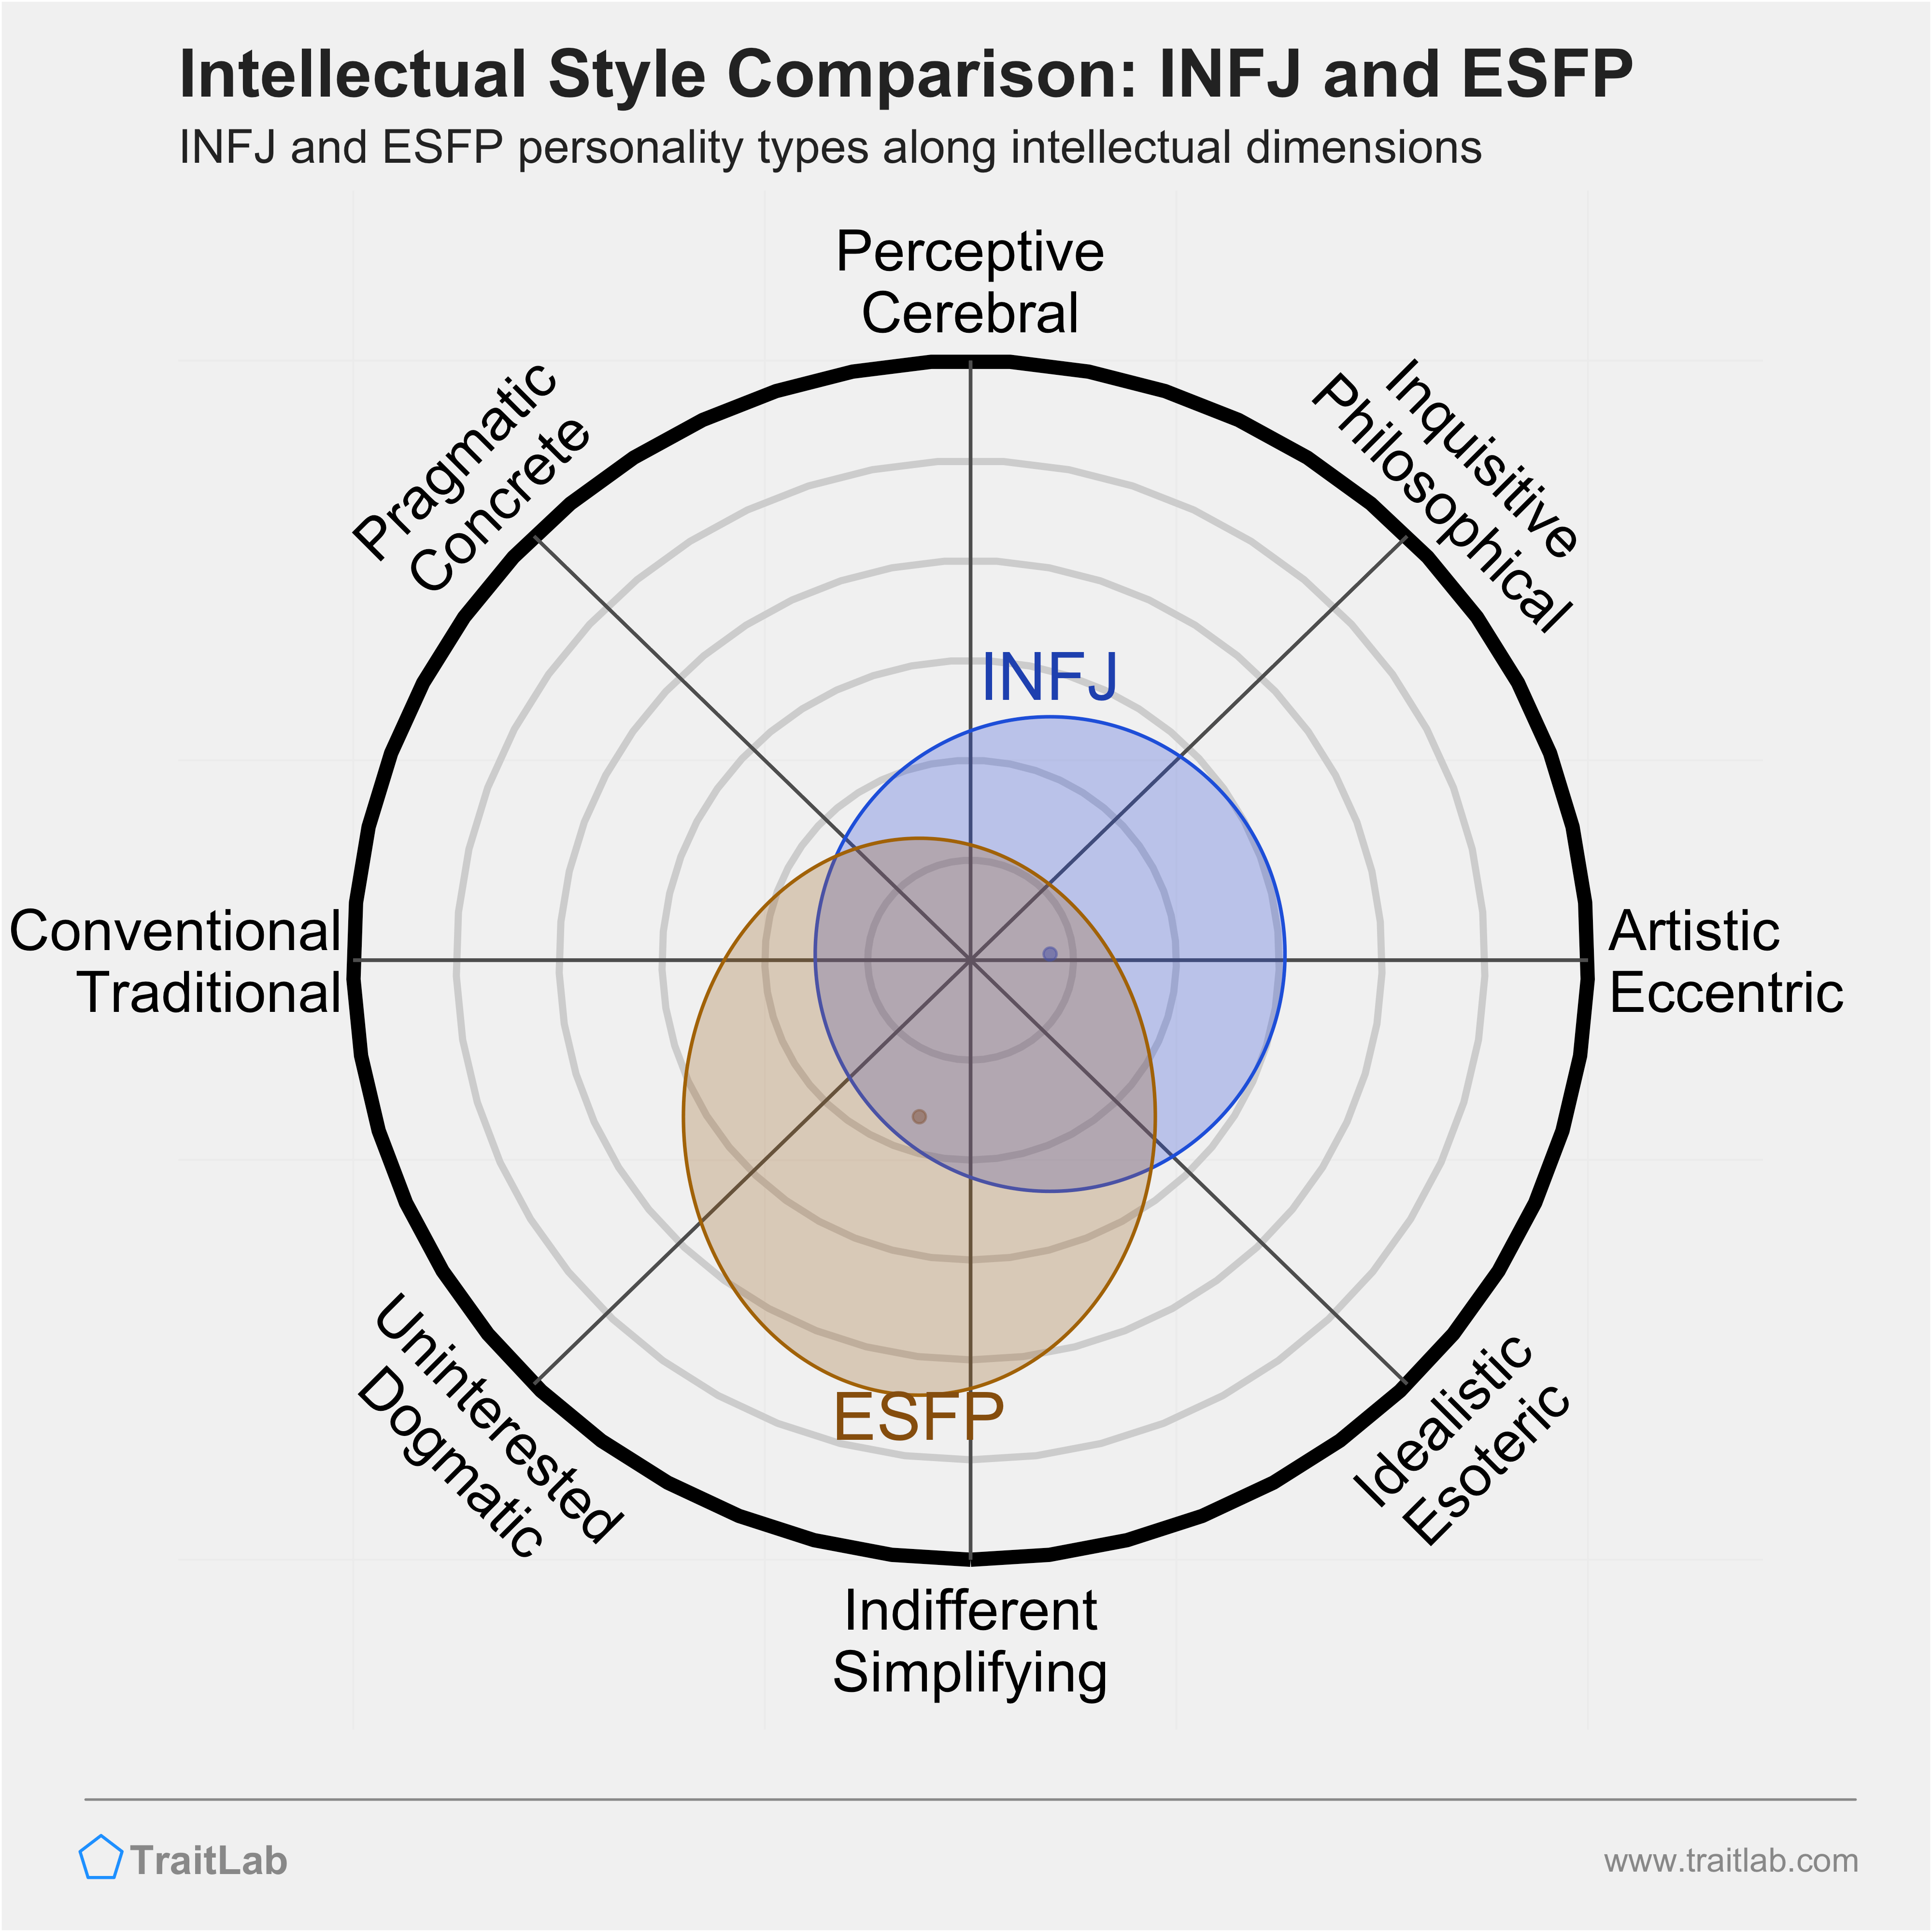 INFJ and ESFP comparison across intellectual dimensions